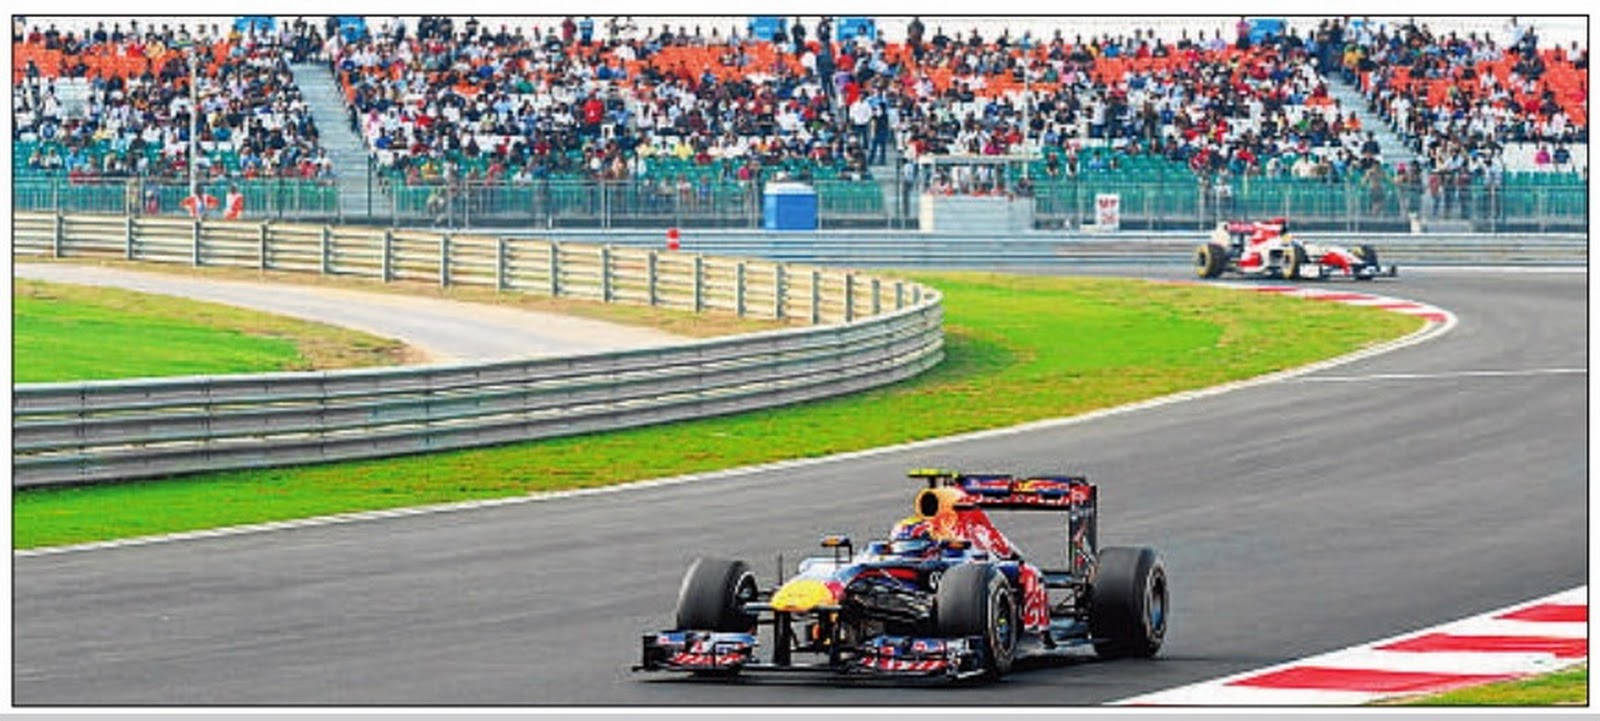 THE F1 INDIAN GRAND PRIX fuNJABi MuNDA